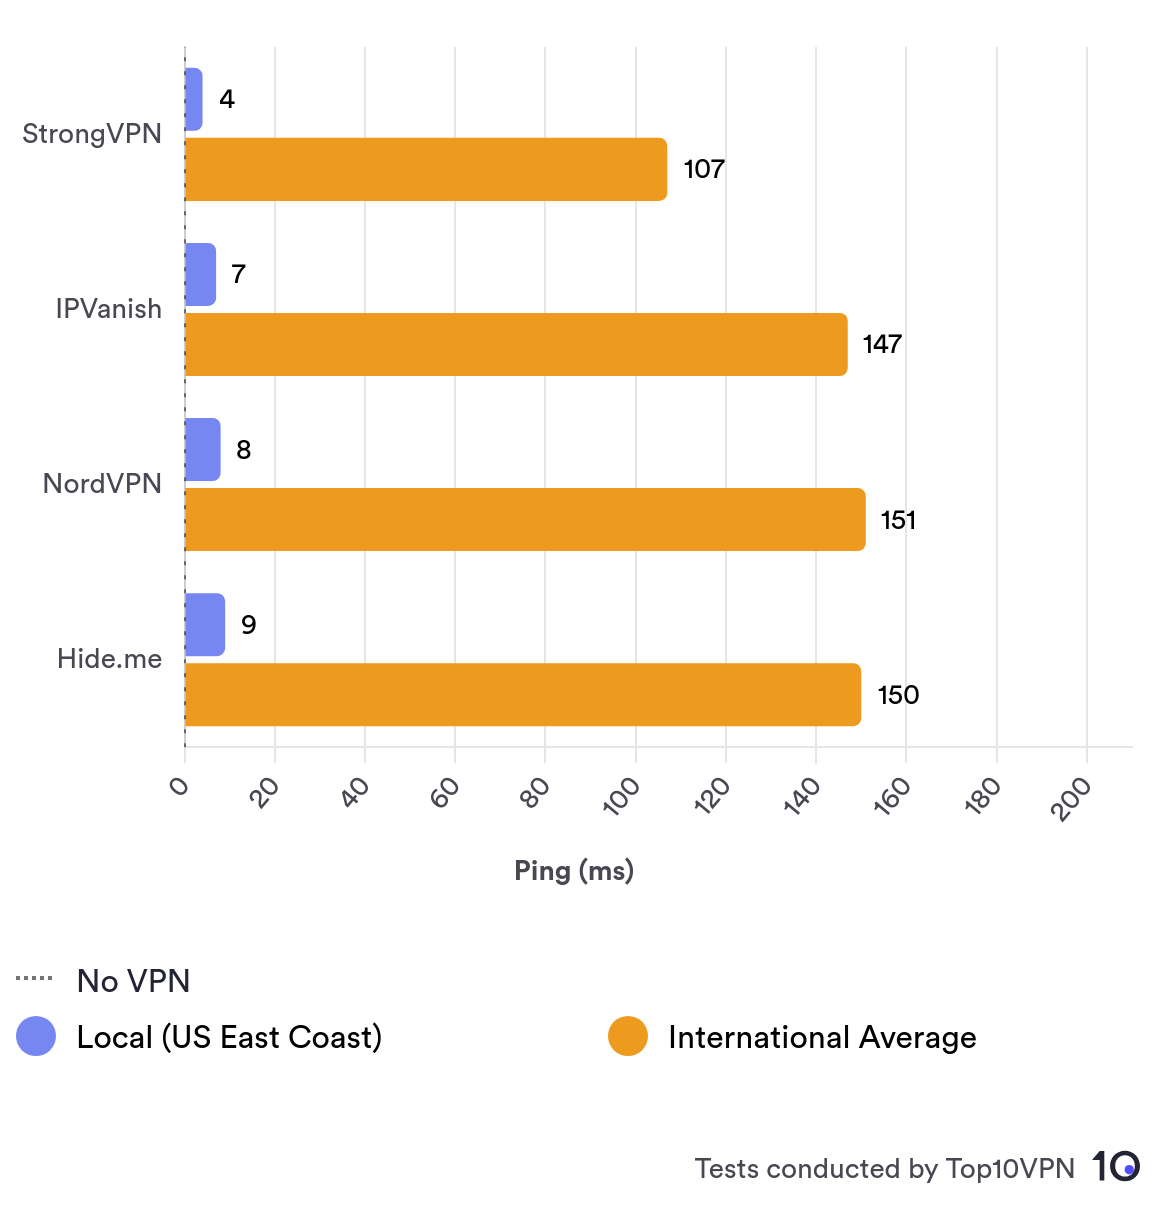 Bar chart comparing ping times between four top VPNs: StrongVPN, IPVanish, NordVPN, and Hide.me.